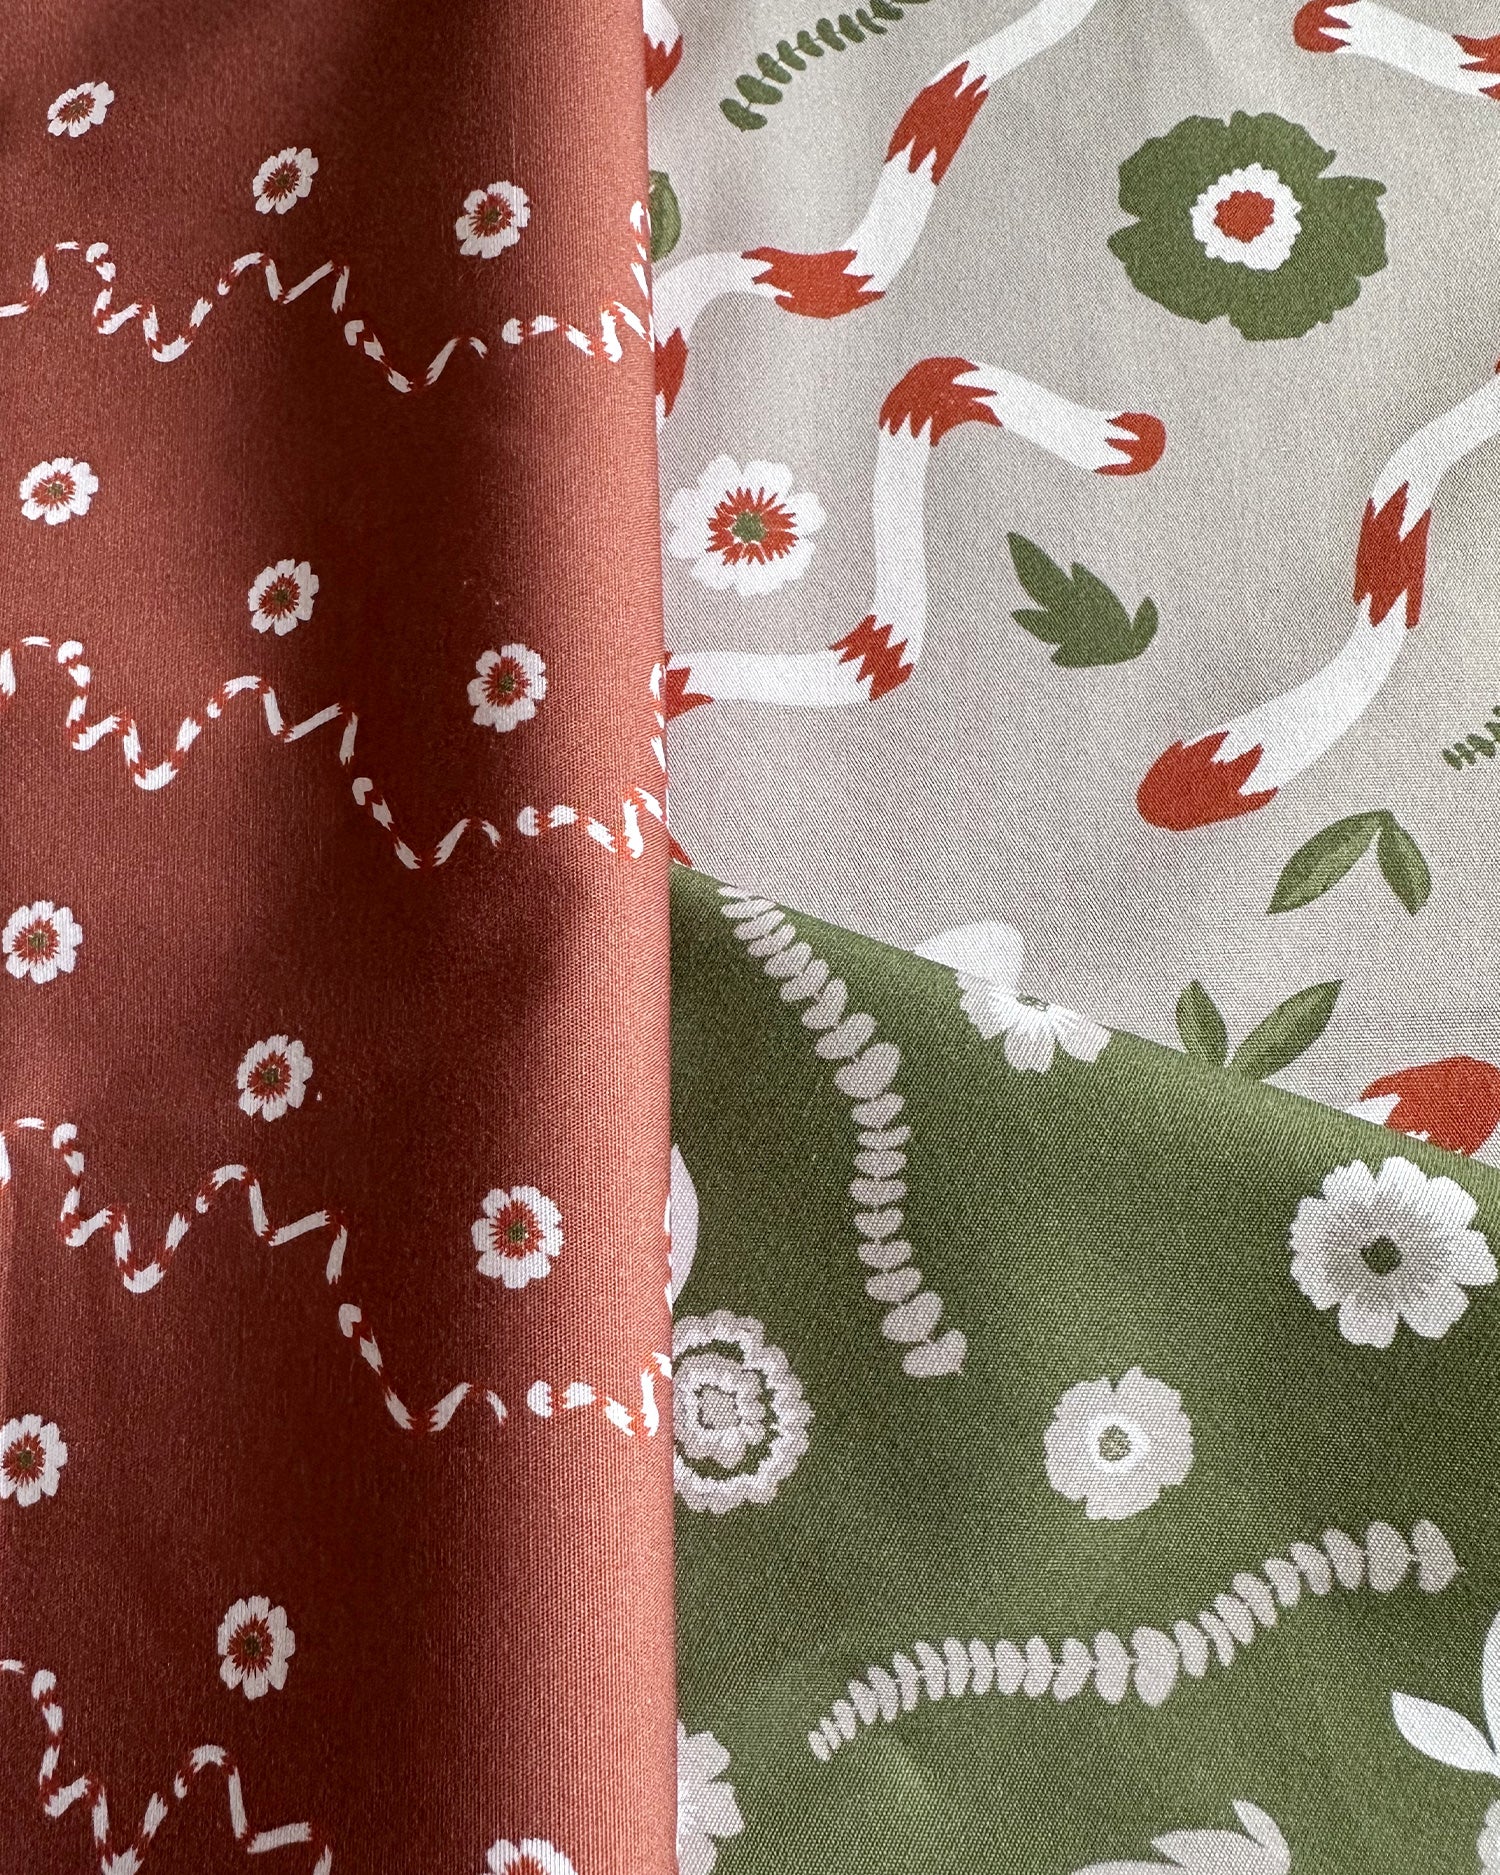 Spirit animal patterns printed in organic fabrics. Original designs by My Friend Paco